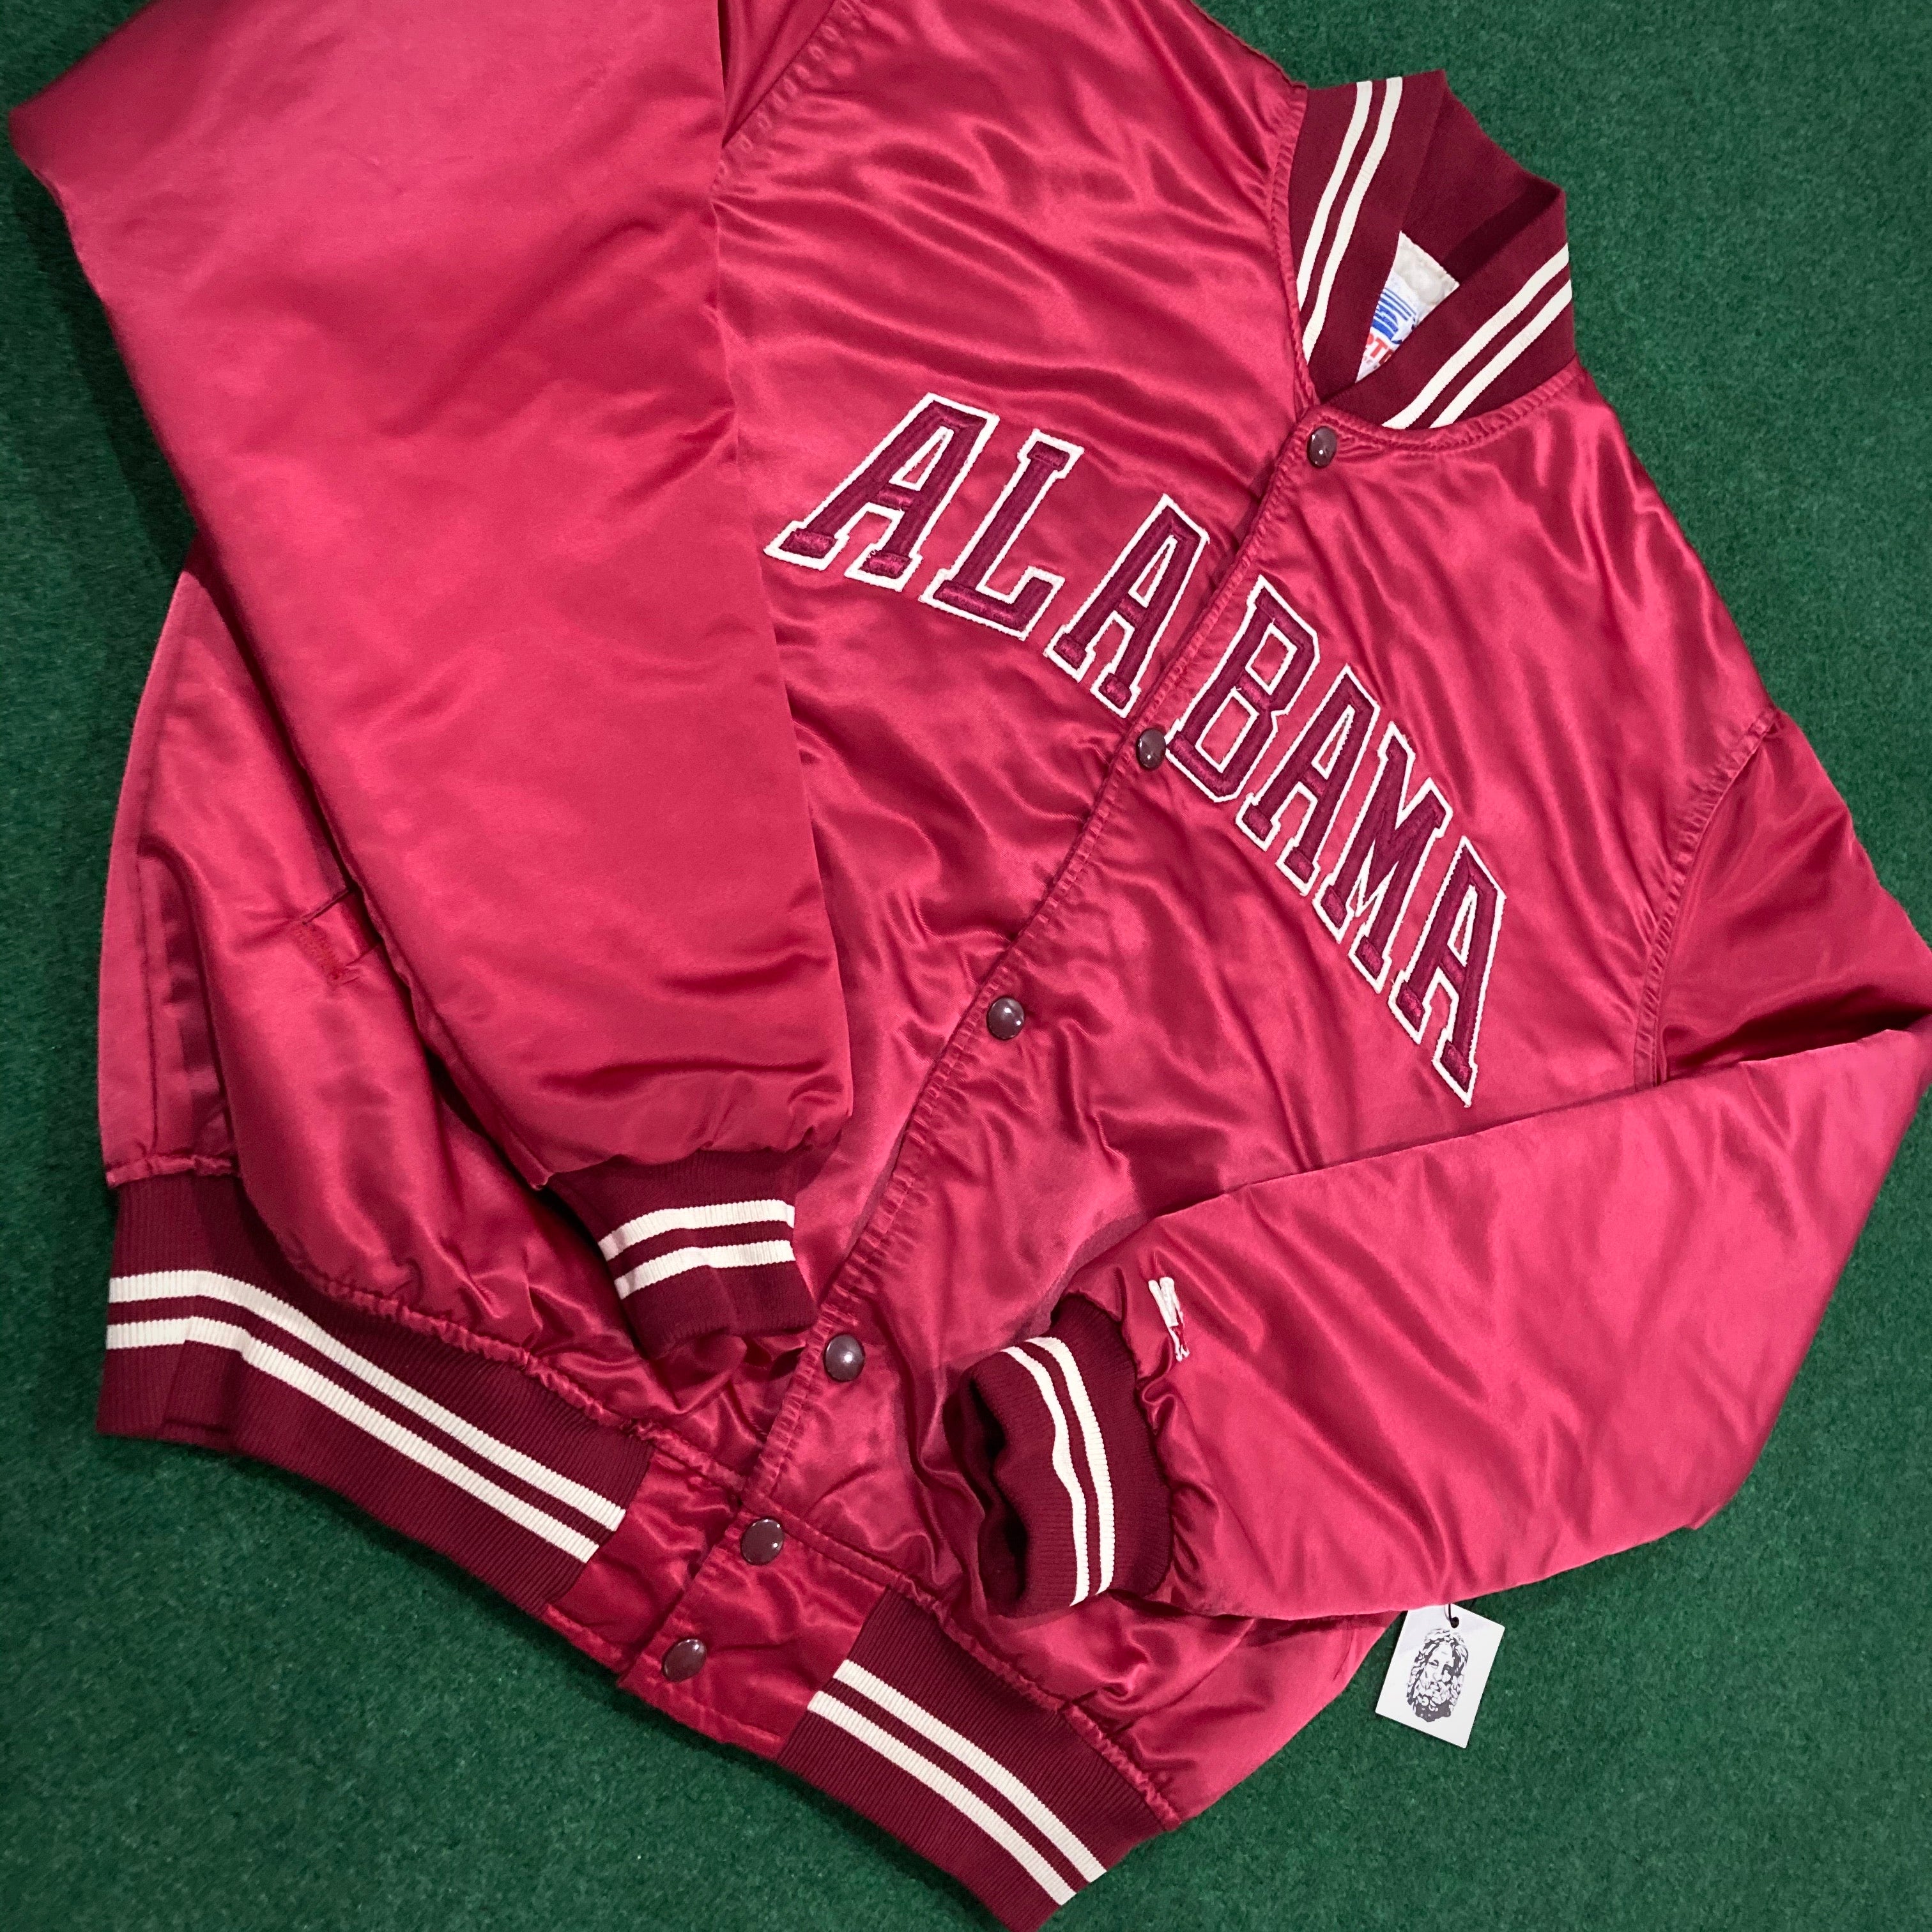 Vintage University of Alabama Starter Jacket